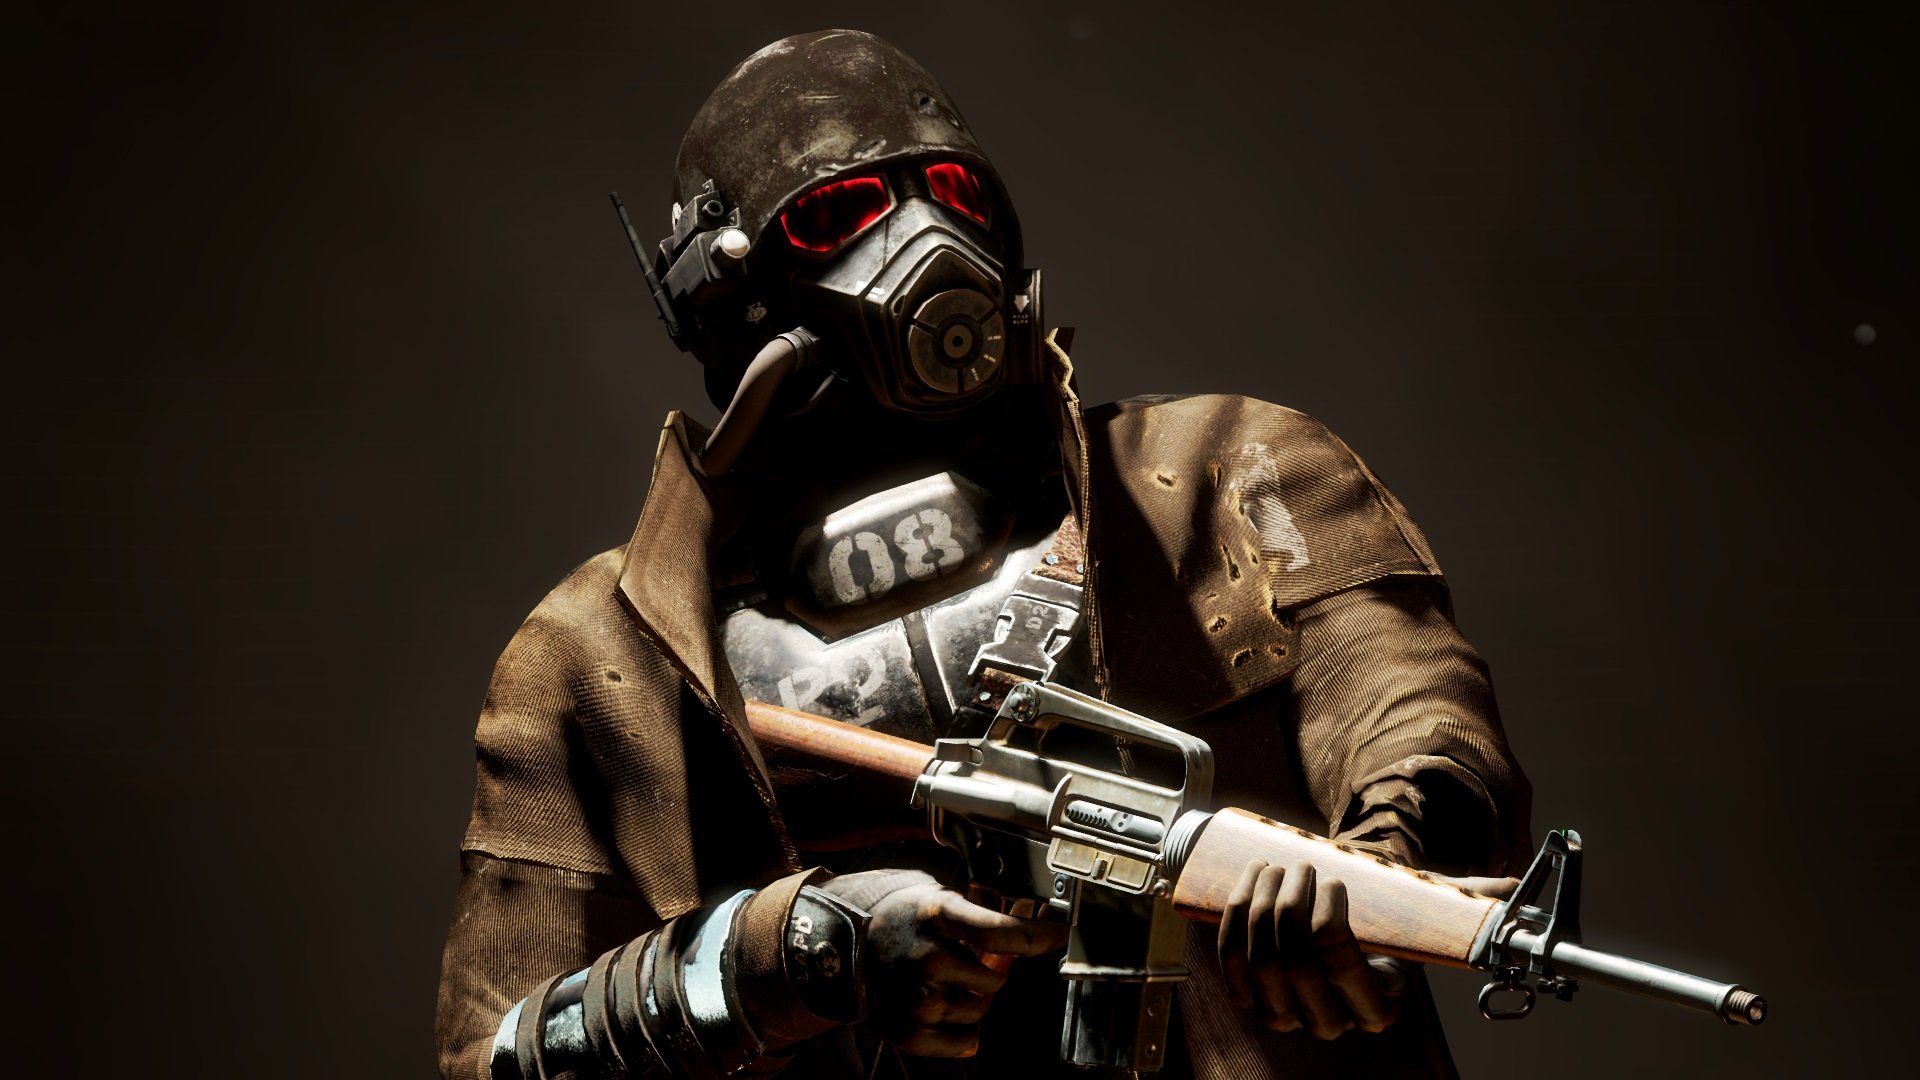 fallout 4 best sniper rifle mods